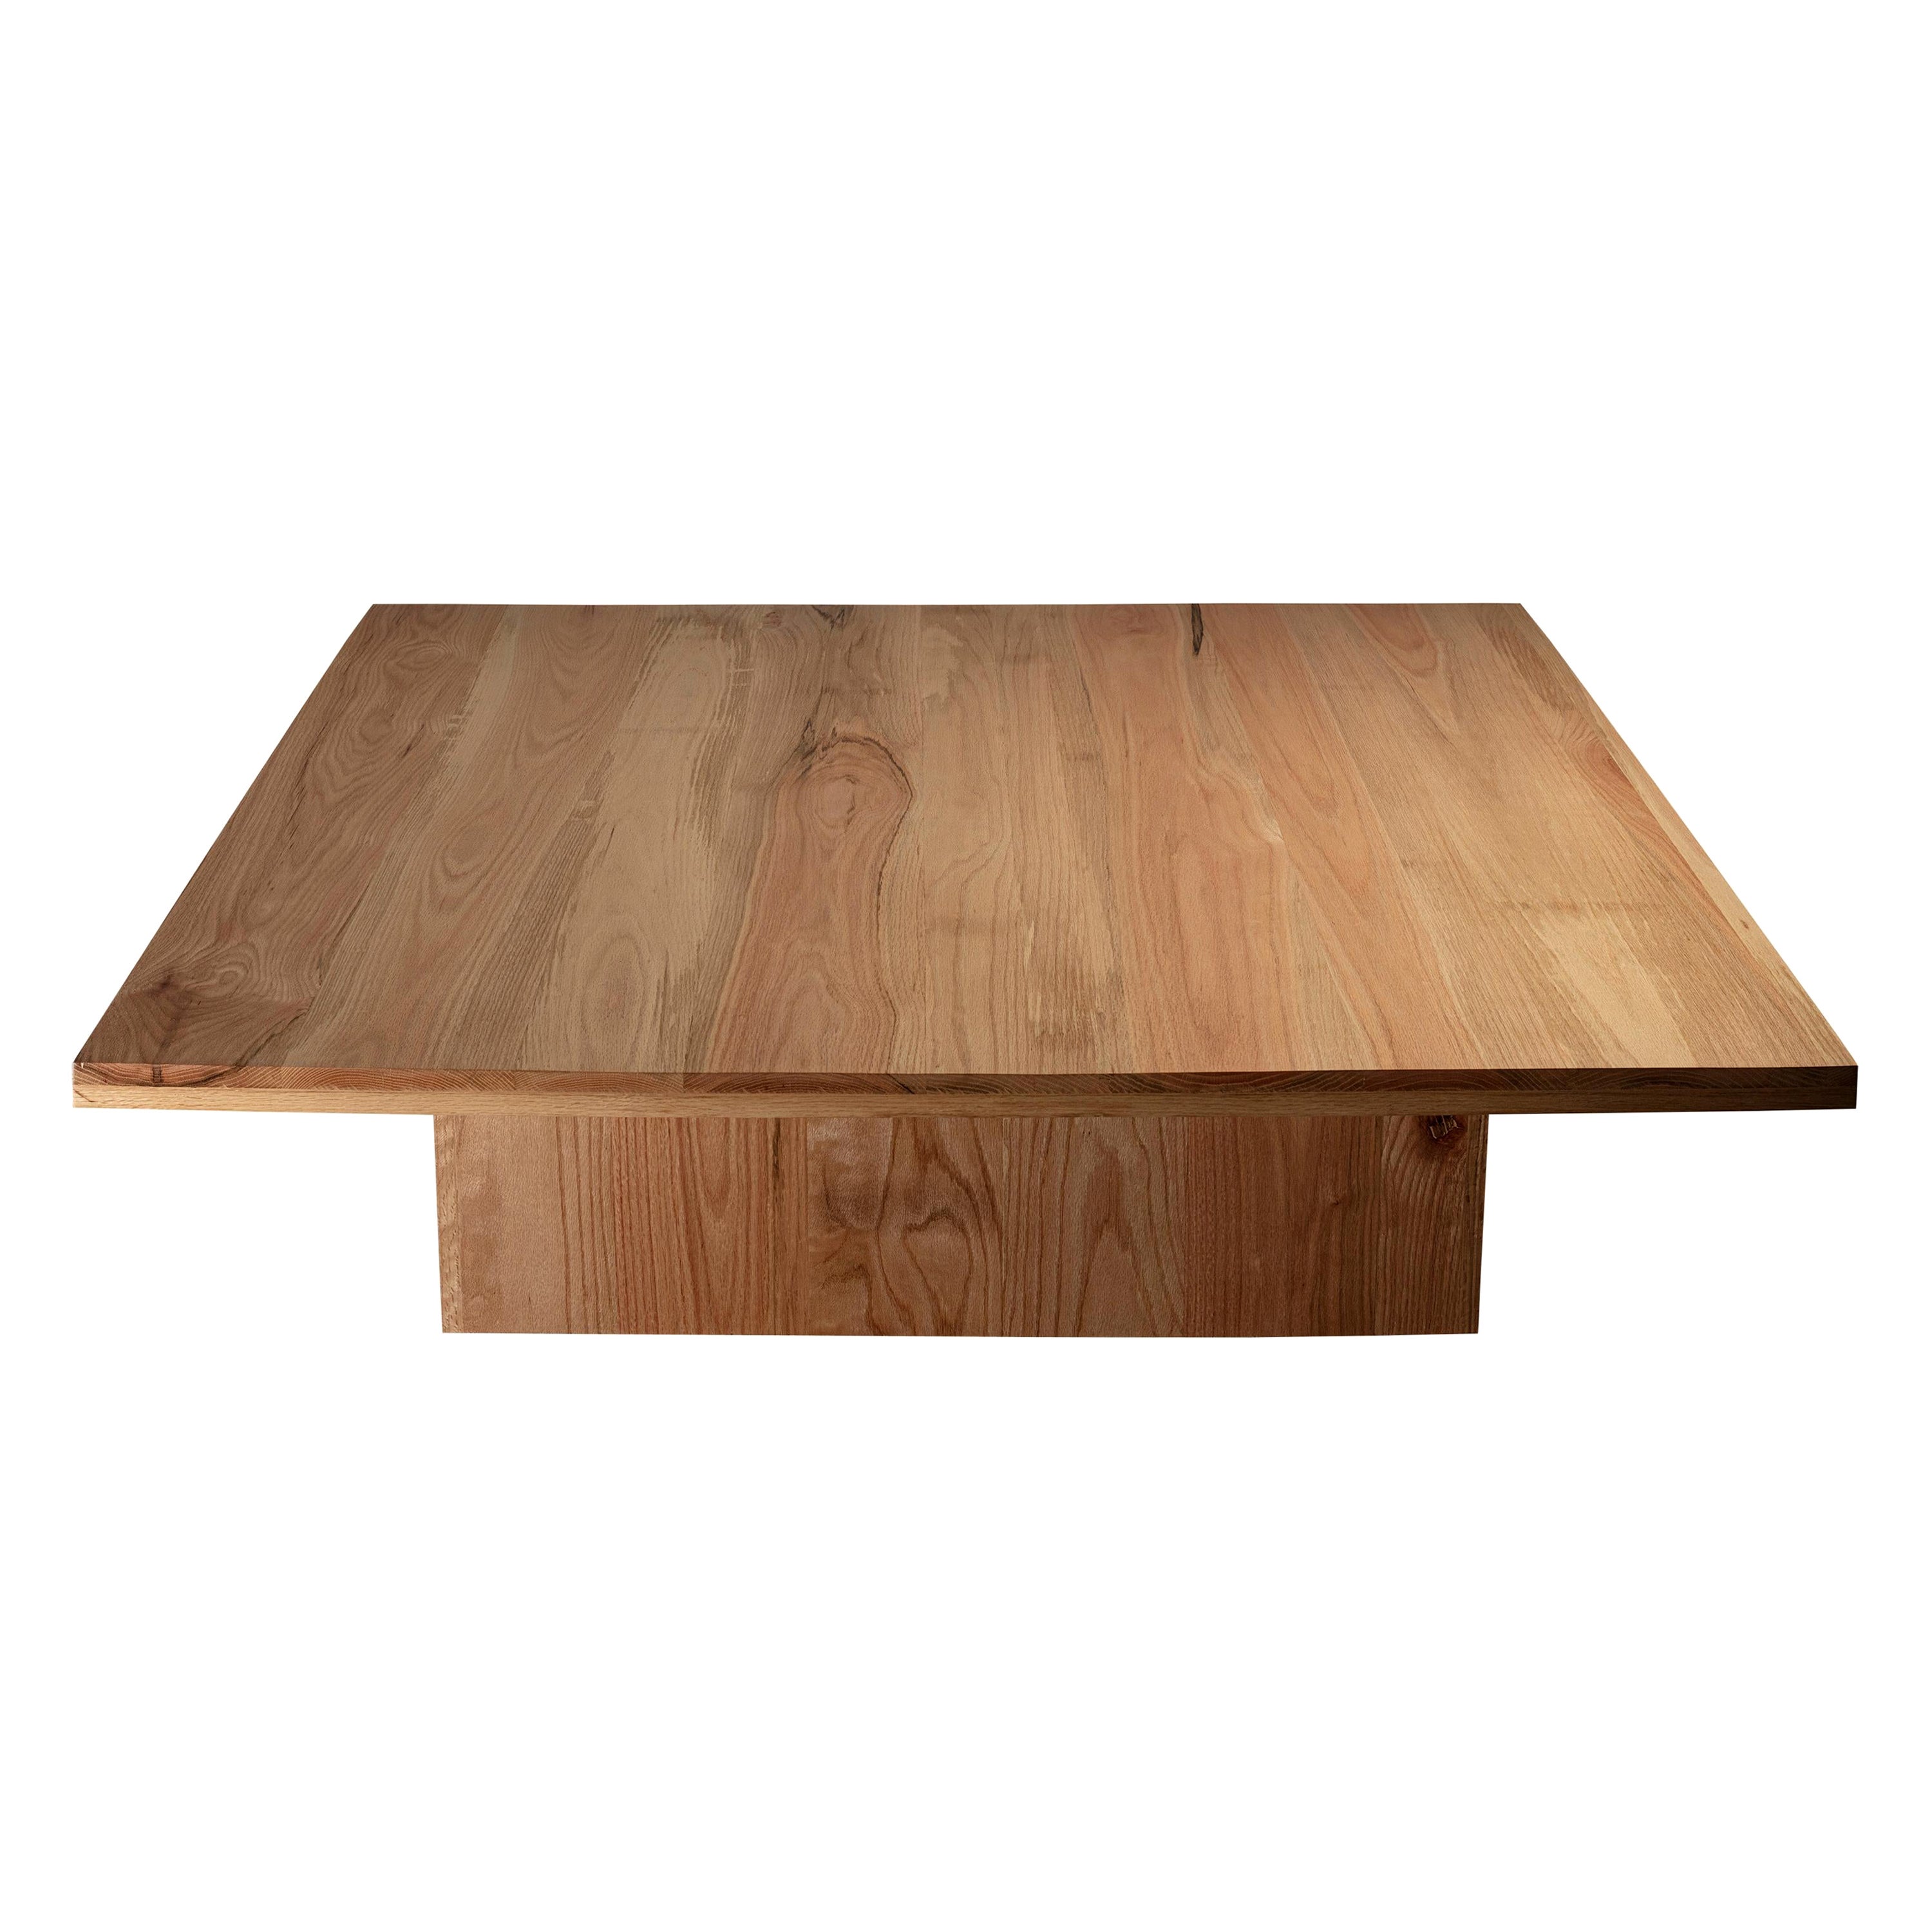 Table basse carrée en chêne rouge naturel en vente